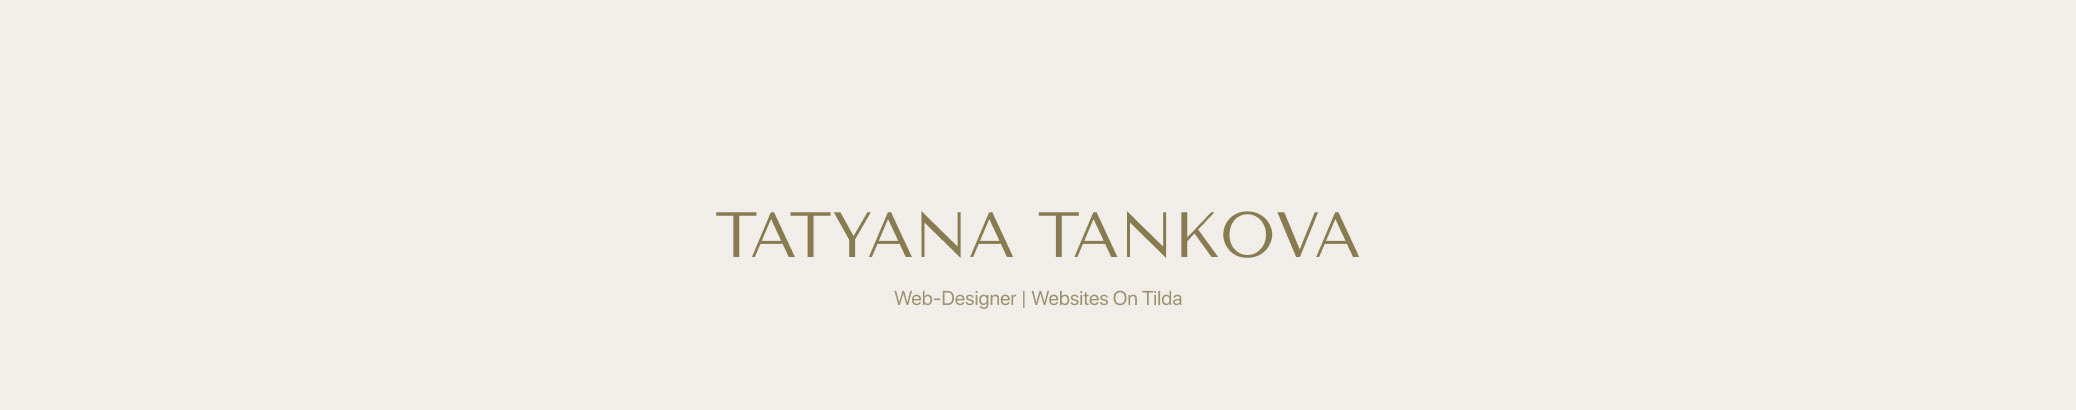 Baner profilu użytkownika Tatyana Tankova